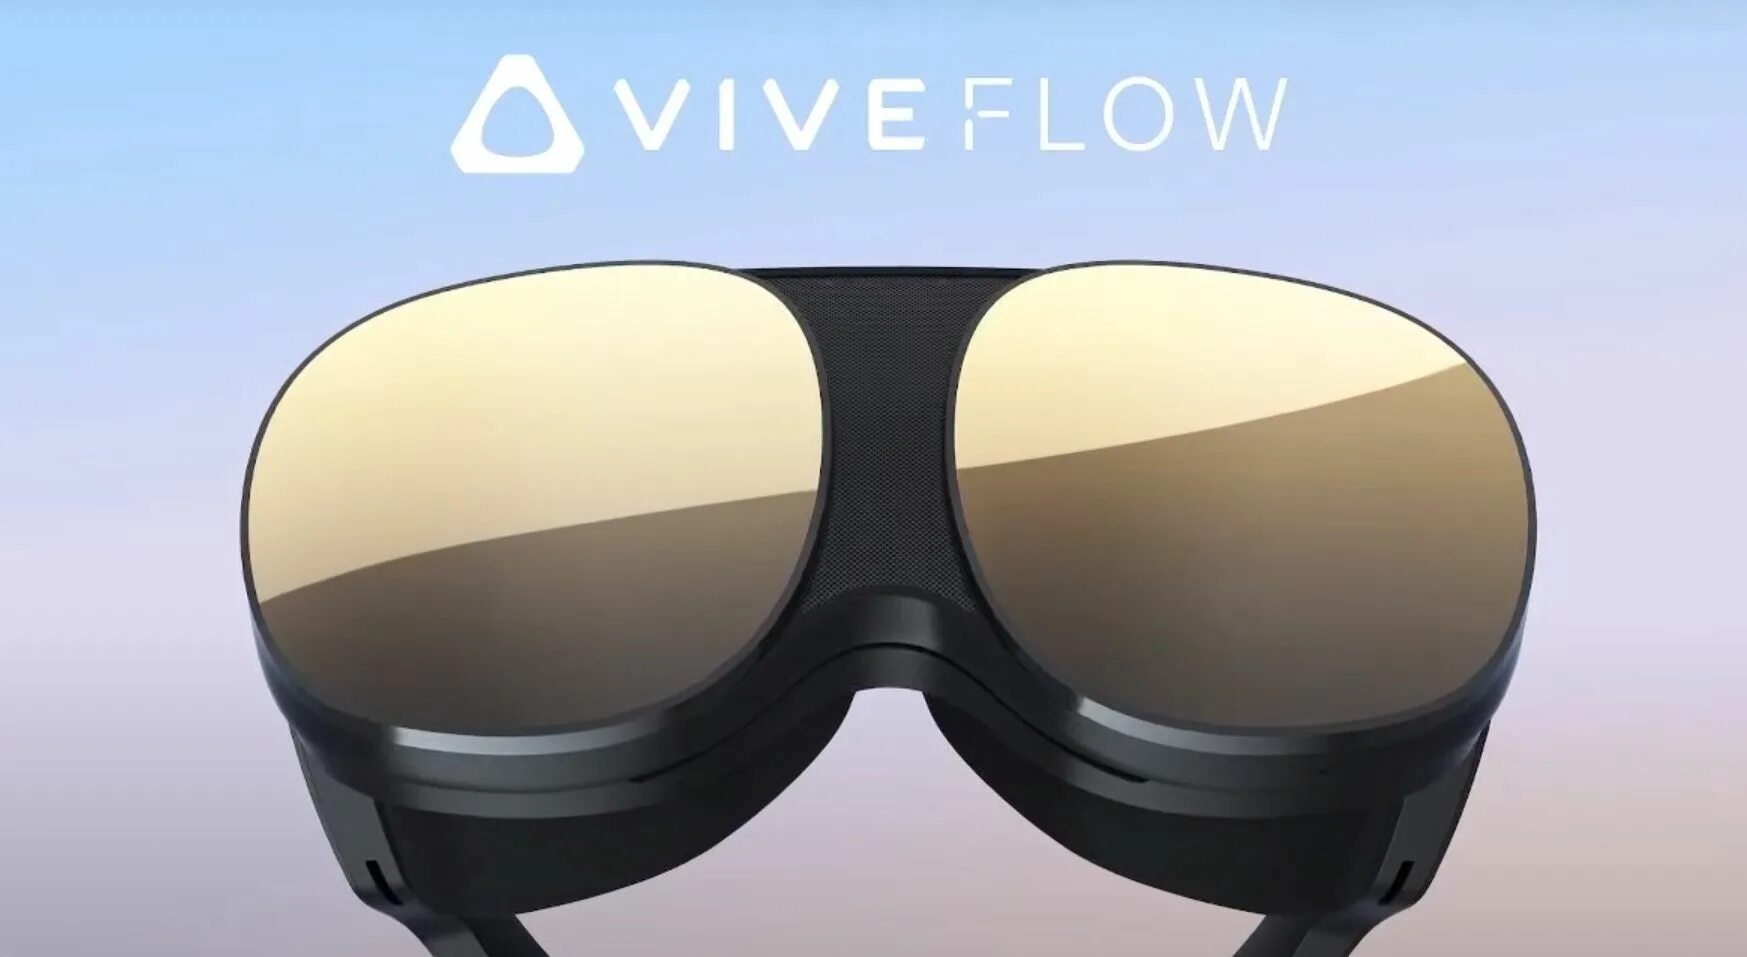 Vr htc htc vive flow. HTC VR Vive Flow. HTC HTC Vive Flow. Vive Flow очки виртуальной реальности модели 2q7y100. HTC ces 2023 новая VR-гарнитура Vive Flow.